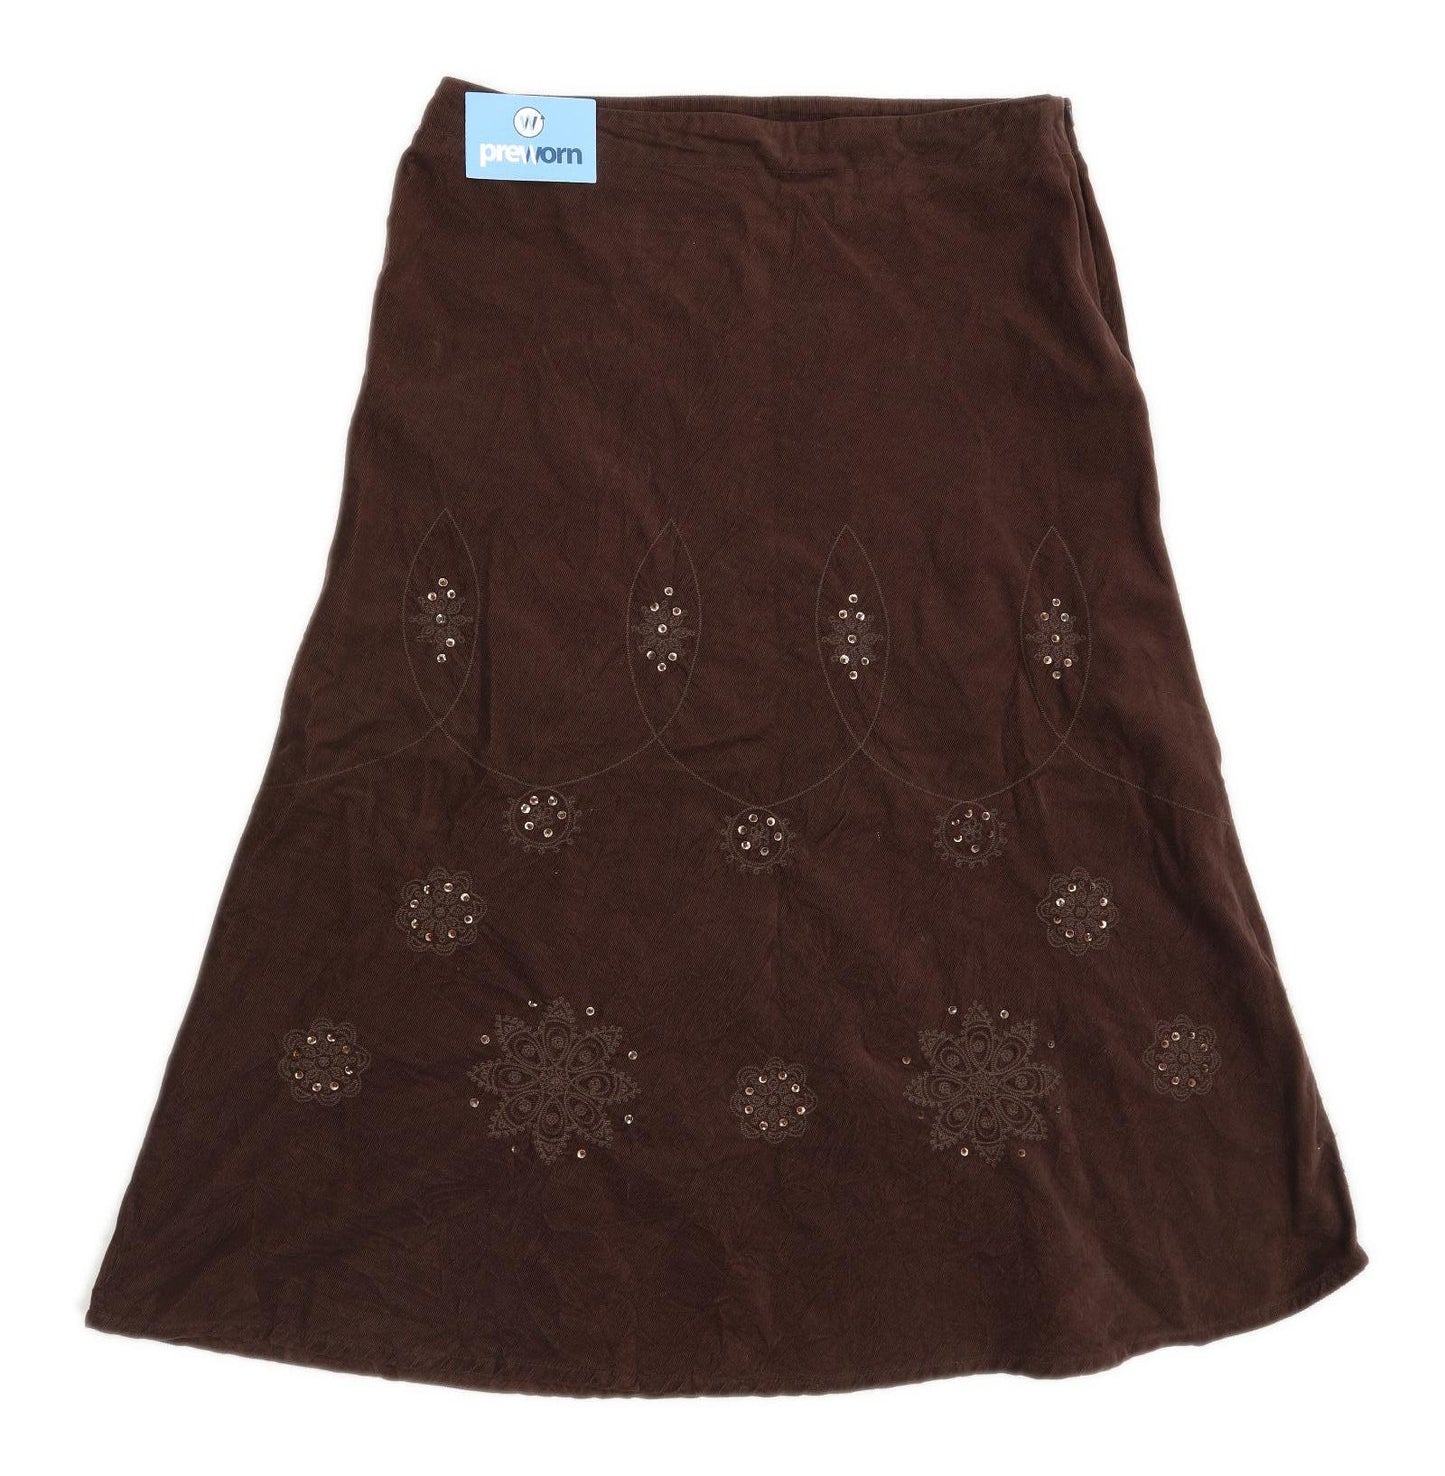 George Womens Size 14 Cotton Textured Brown Skirt (Regular)